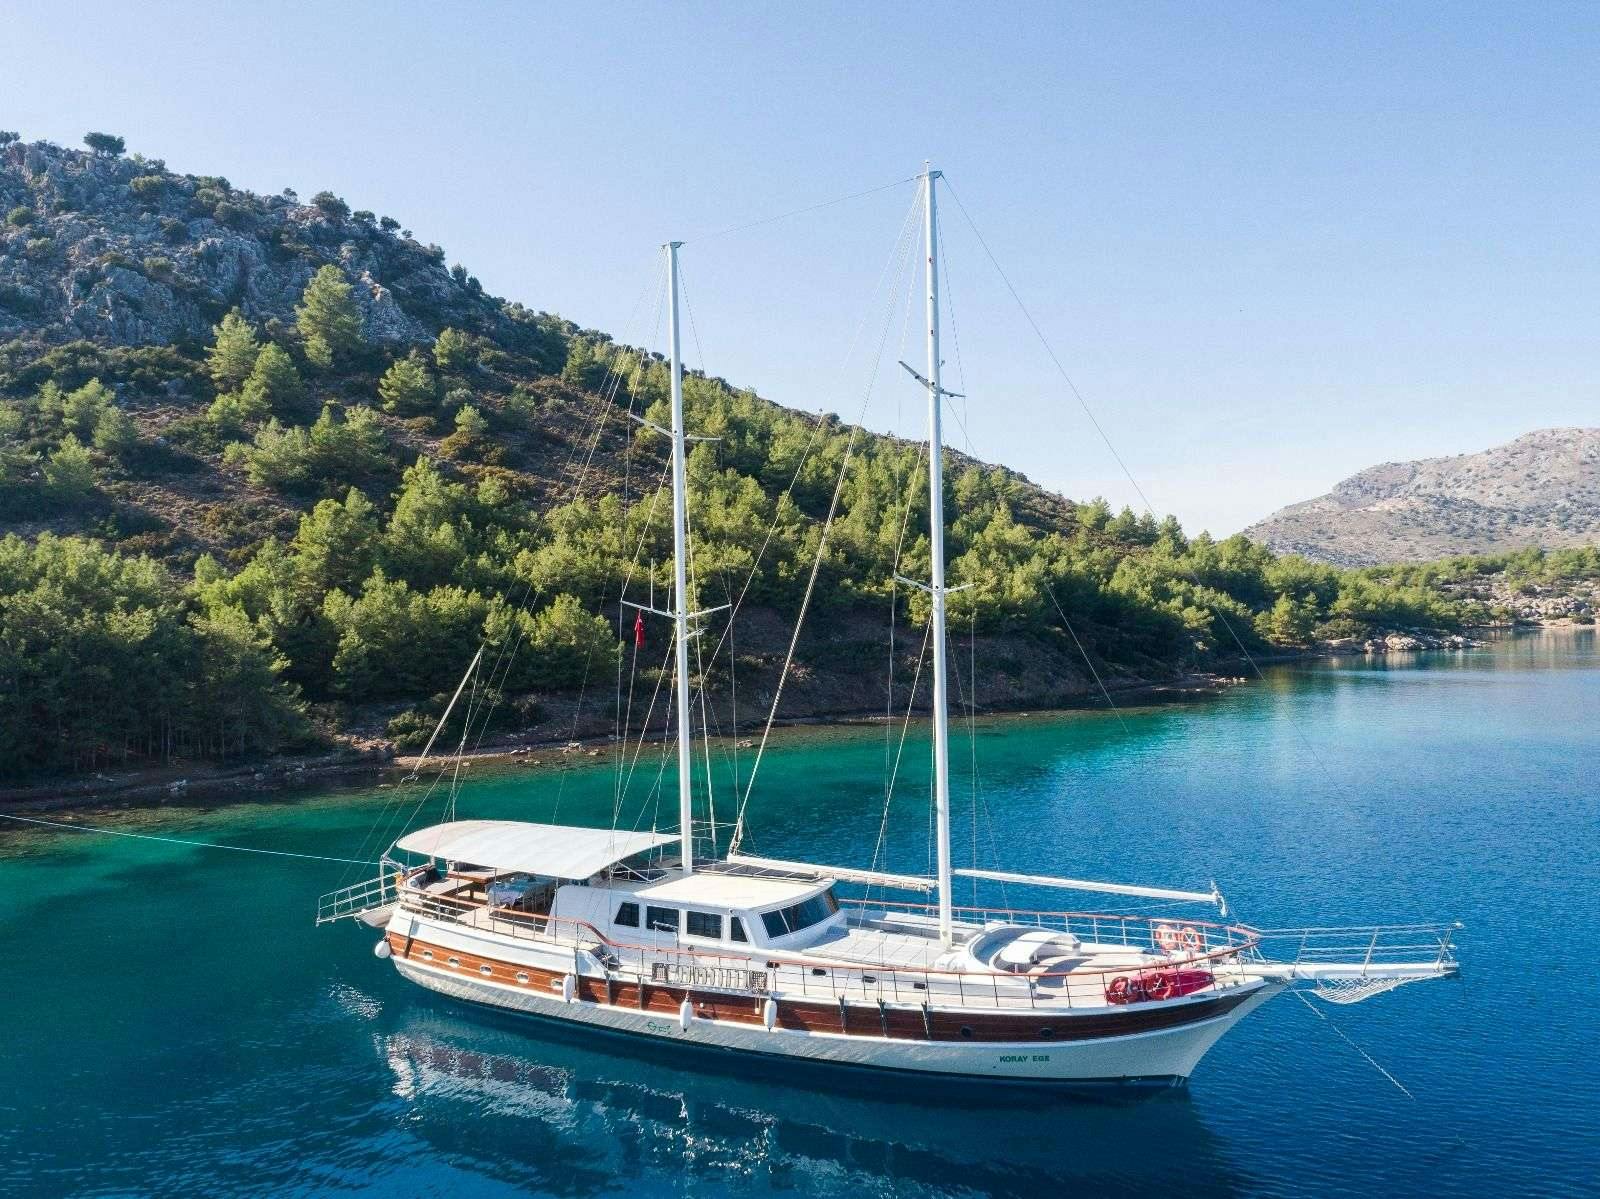 koray ege - Yacht Charter Syros & Boat hire in Greece & Turkey 1